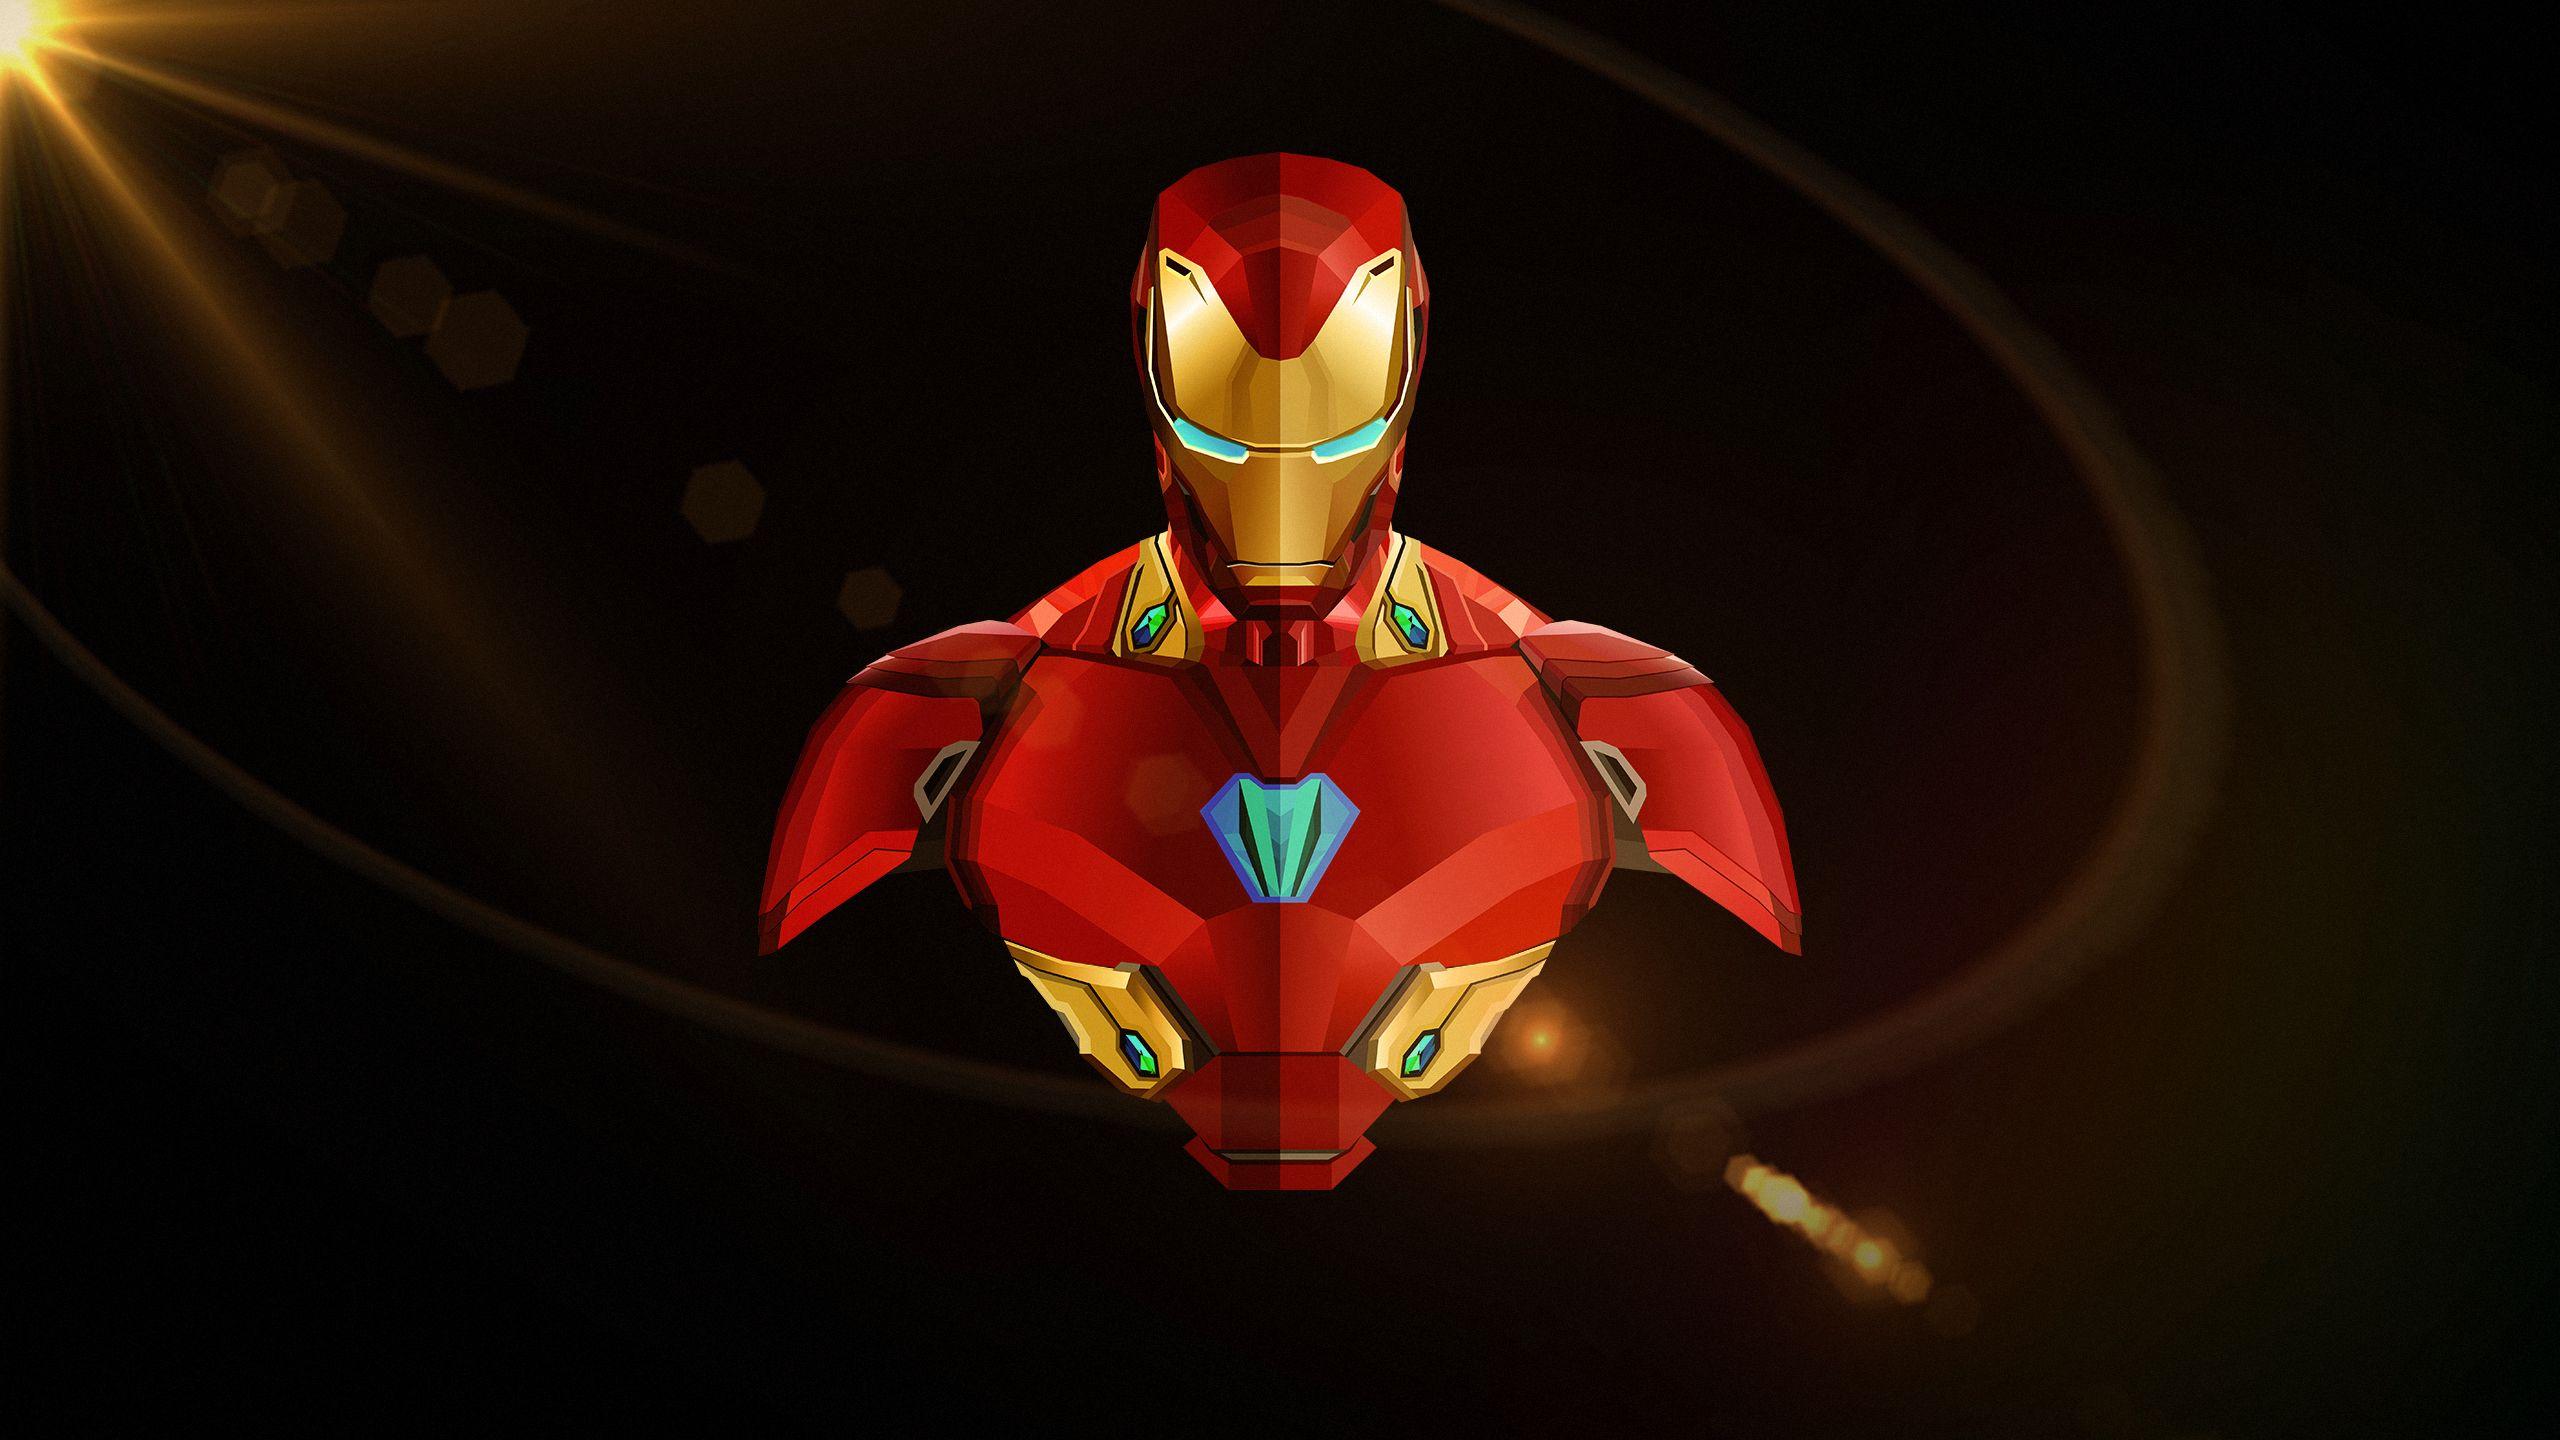 Iron Man Avengers Infinity War Minimal Wallpaper. HD Wallpaper